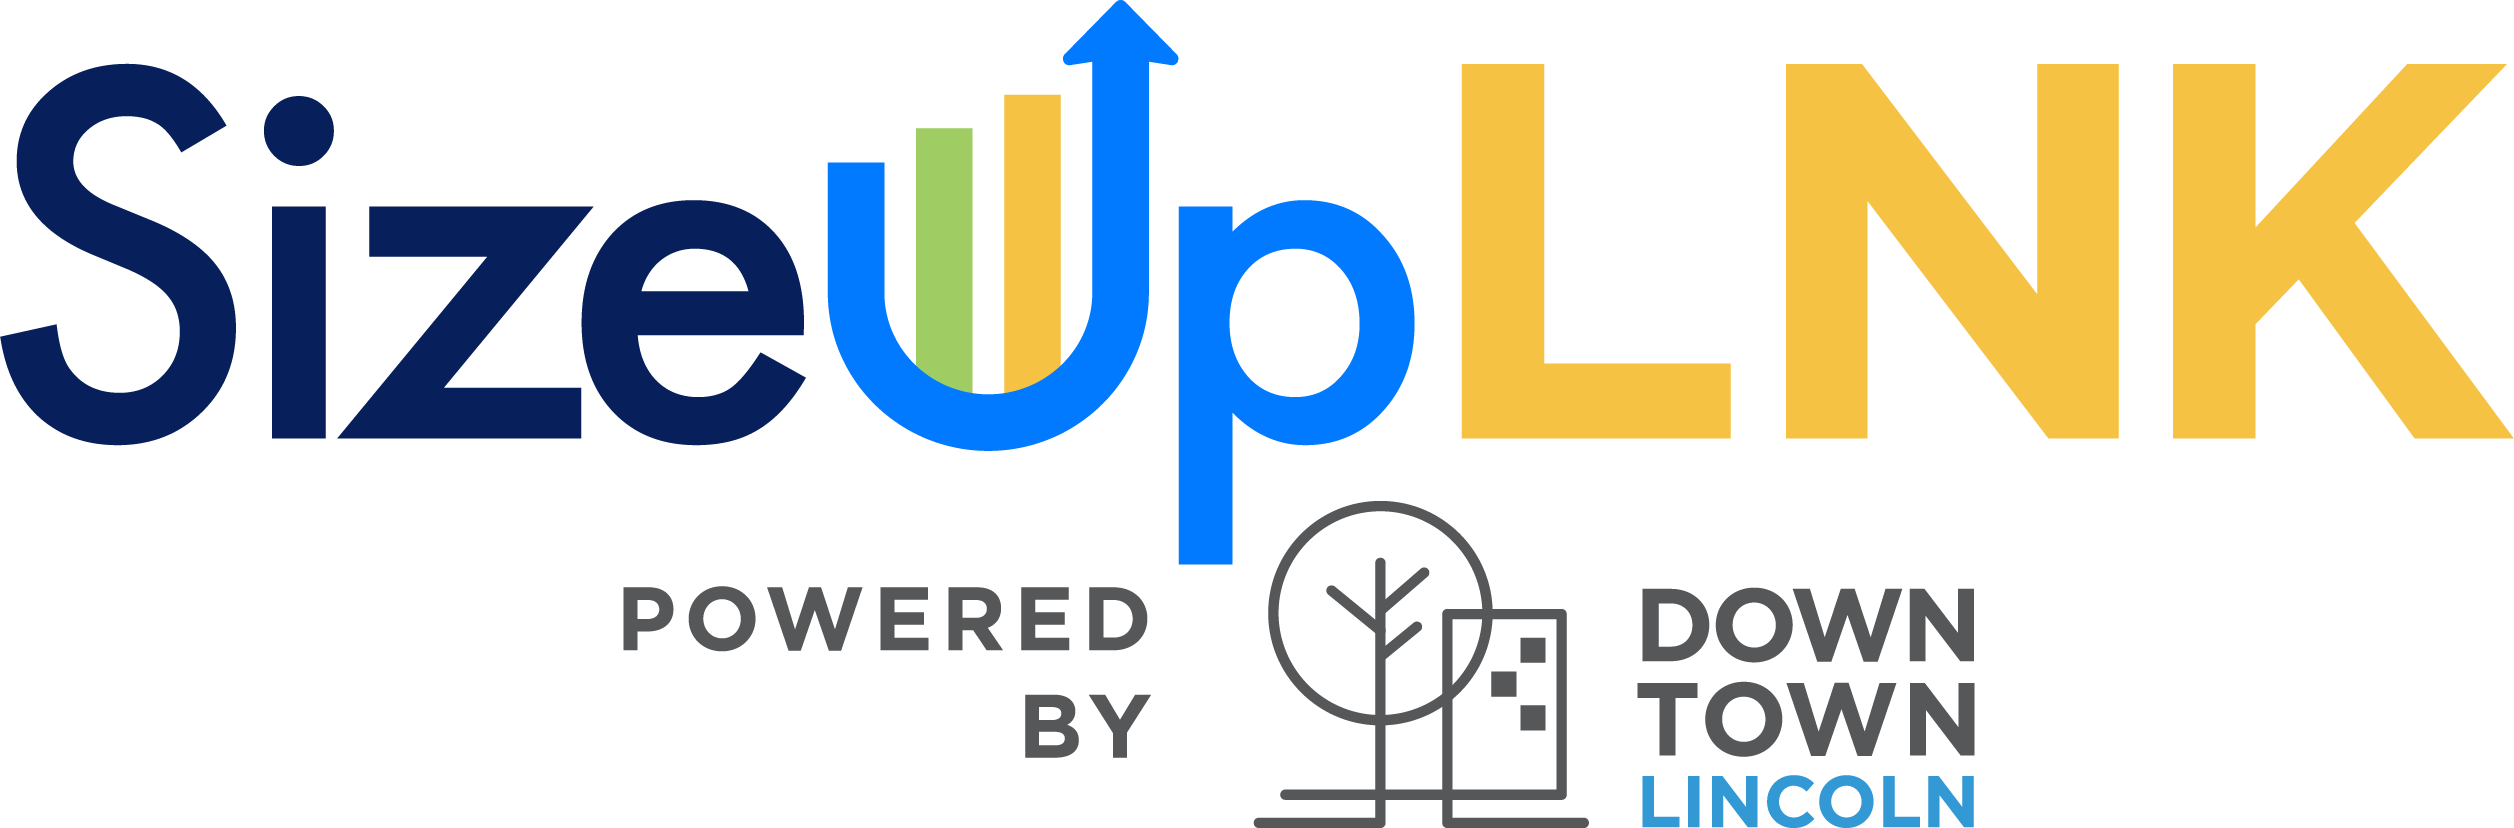 SizeUpLincoln - Big Data for Lincoln Small Businesses